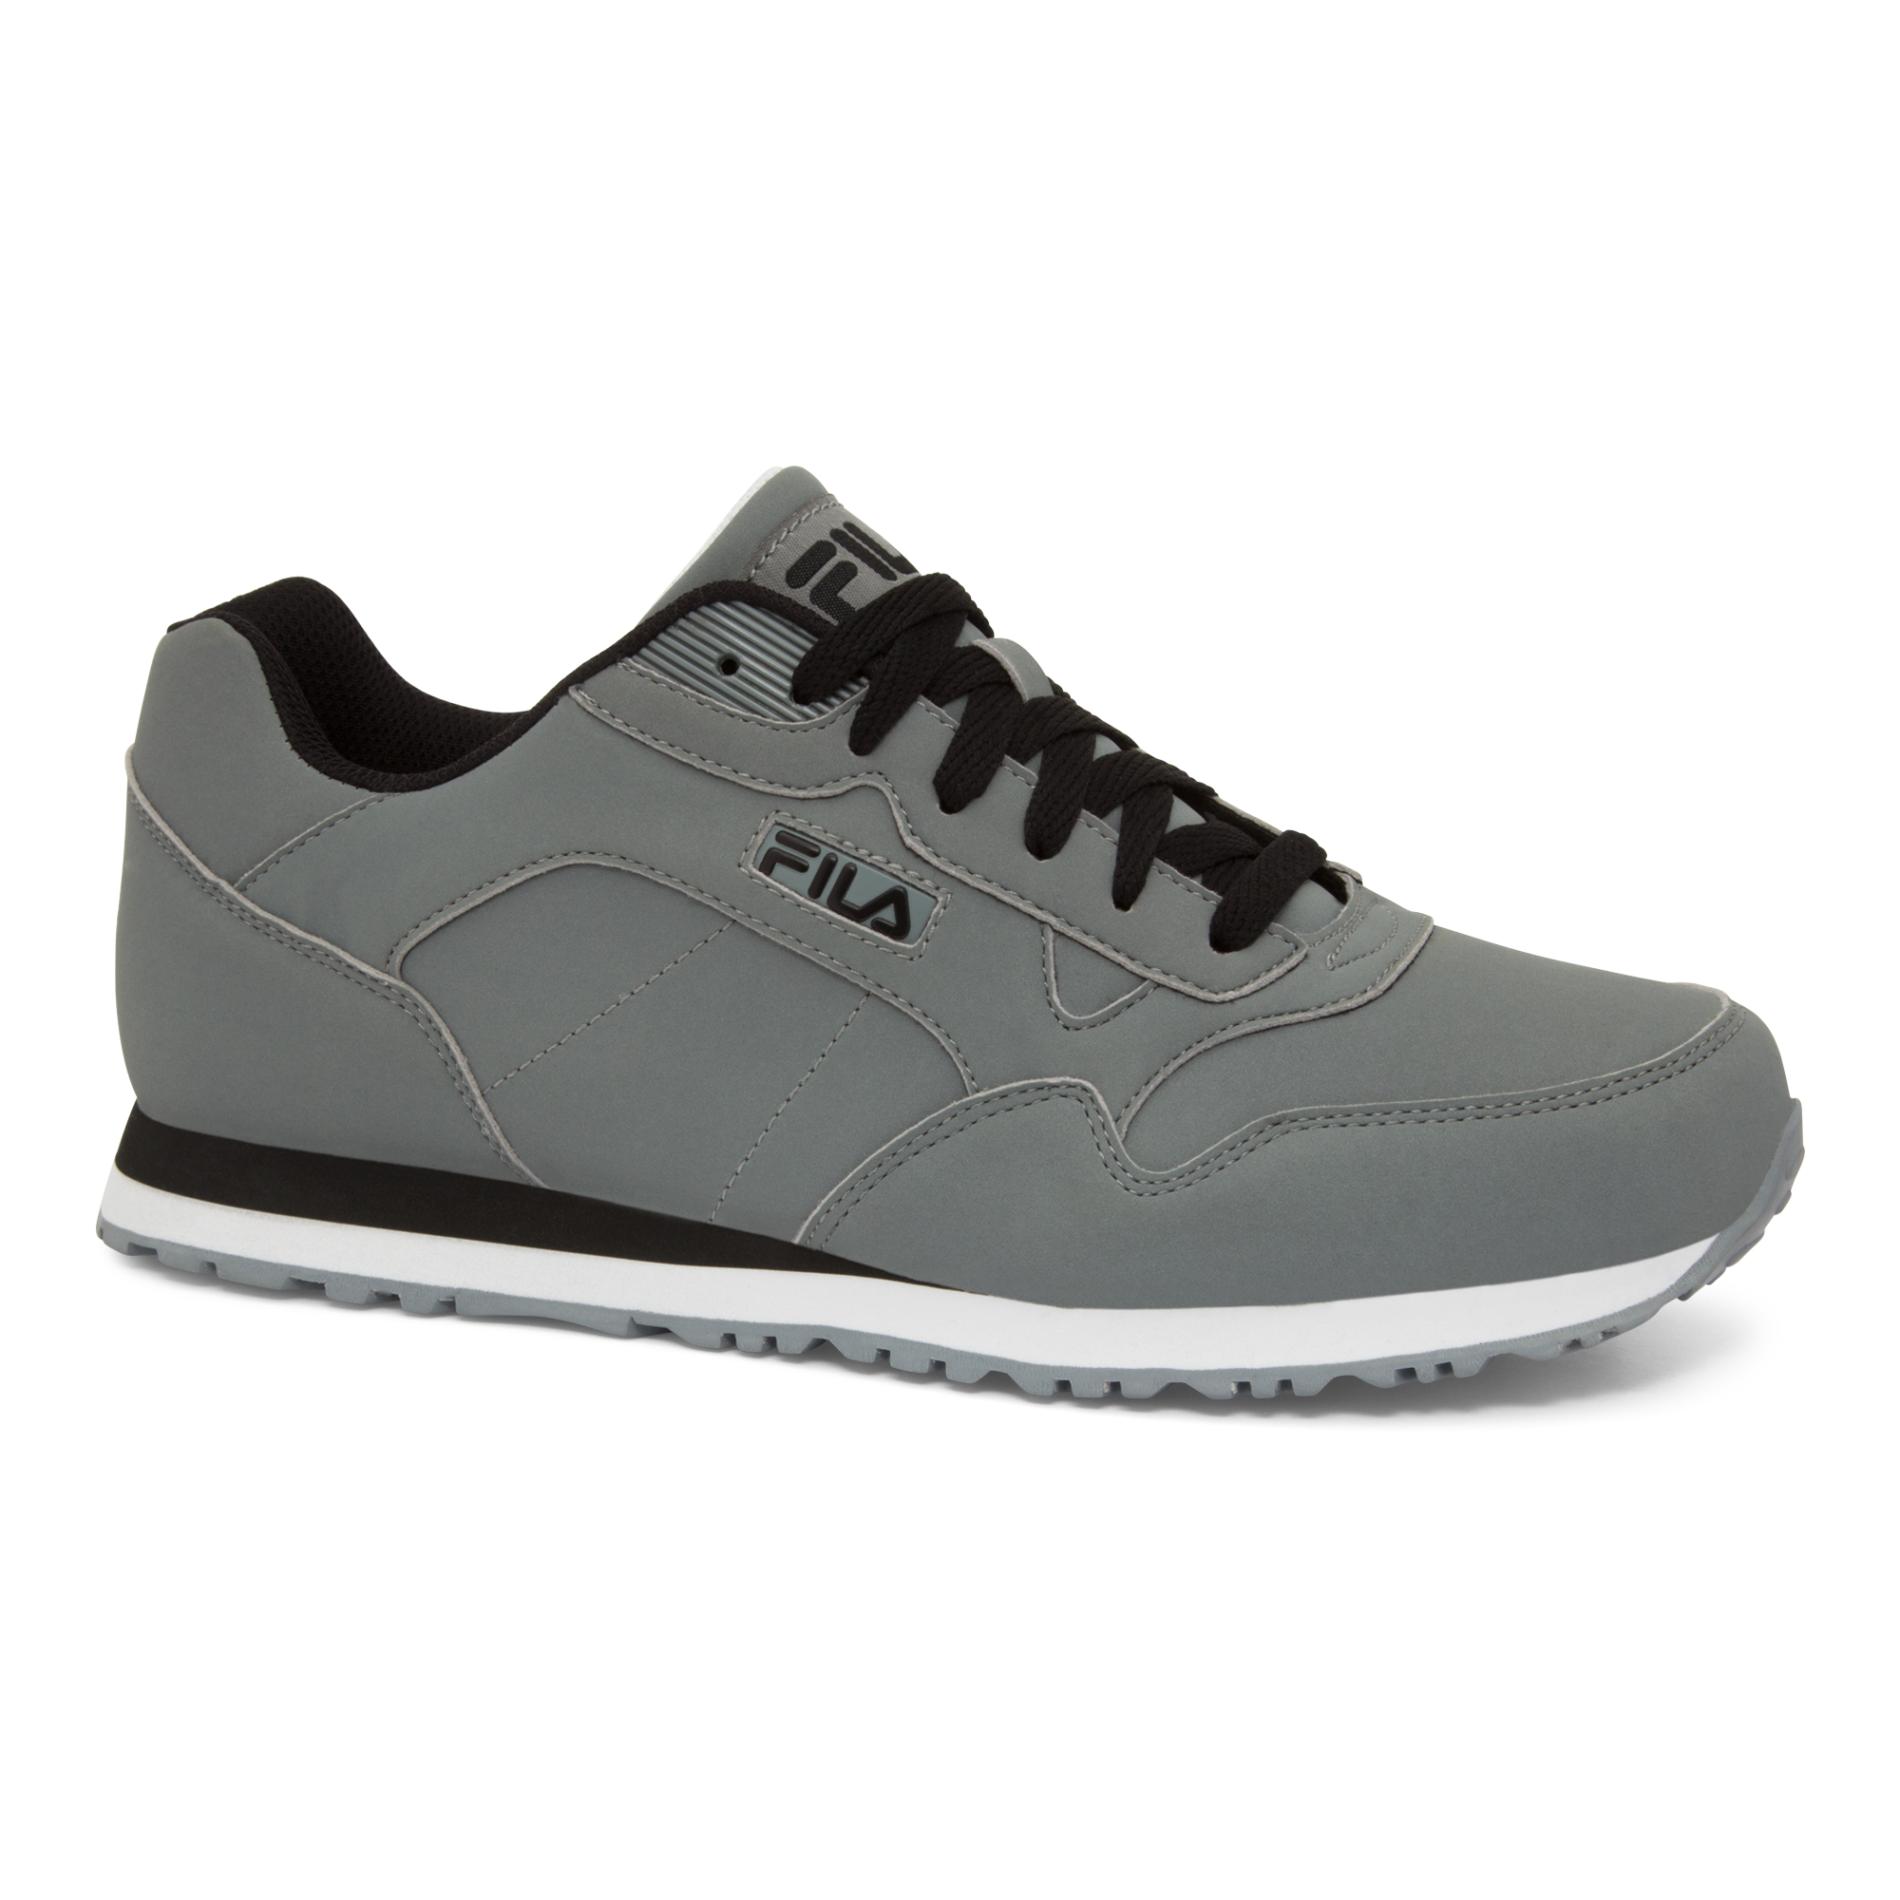 Fila Men's Cress Athletic Shoe - Gray/Black